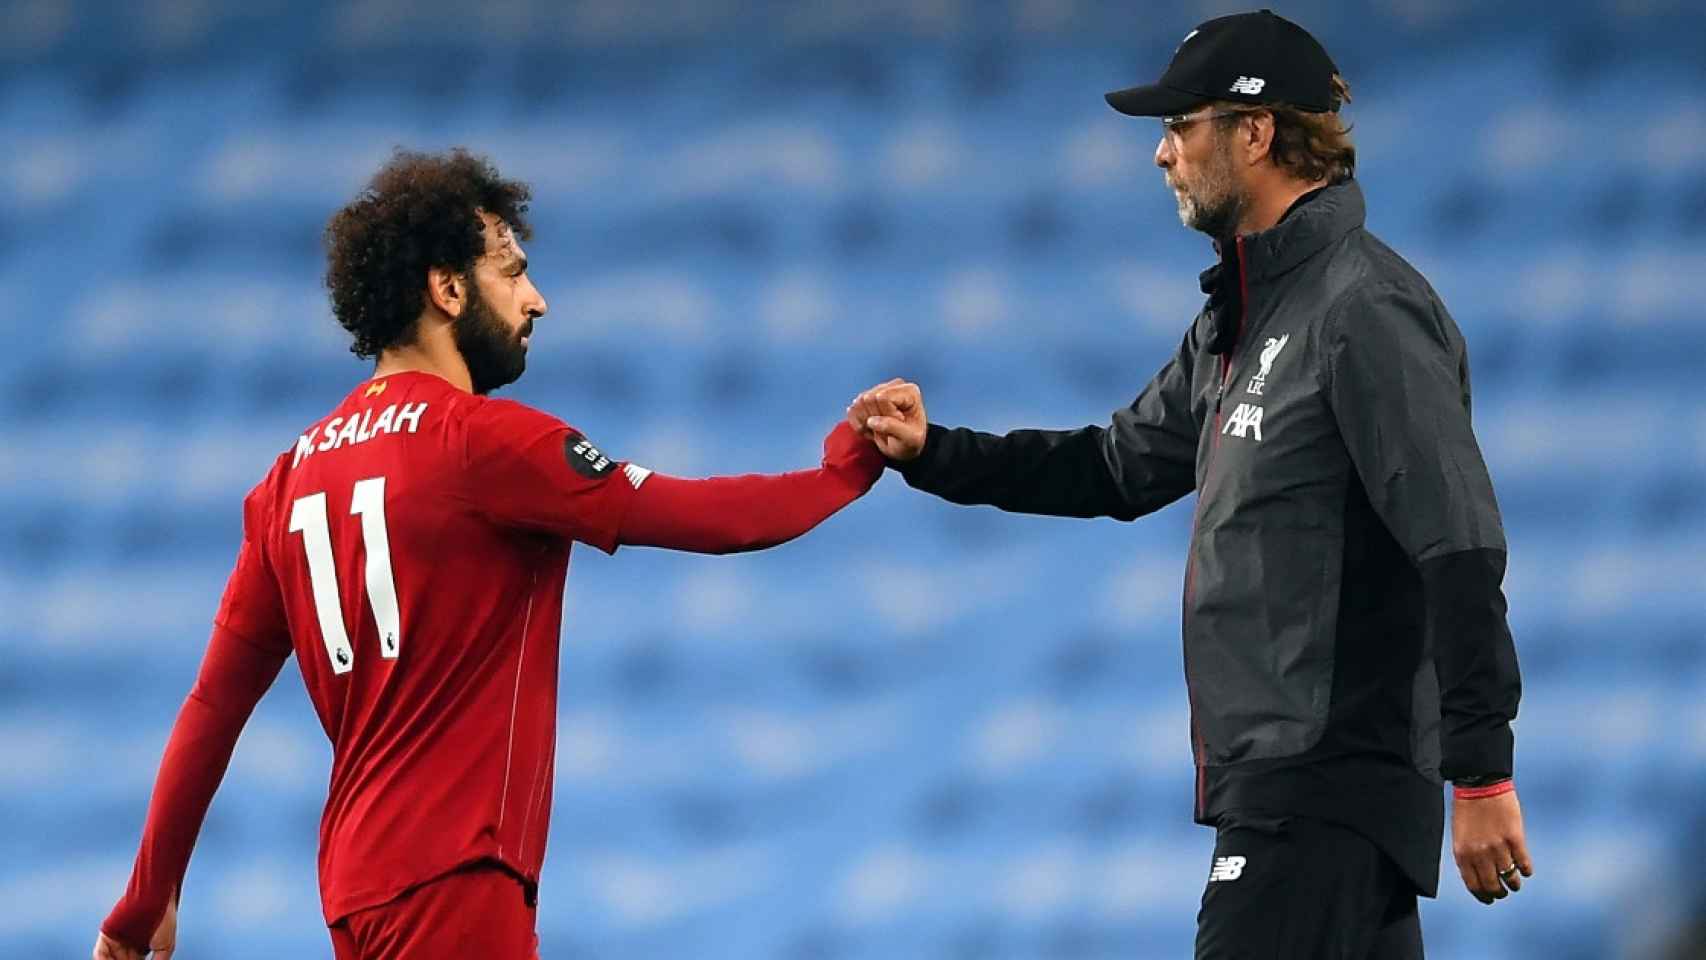 Mohamed Salah saluda a su entrenador en el Liverpool, Jurgen Klopp / TOP PROFES